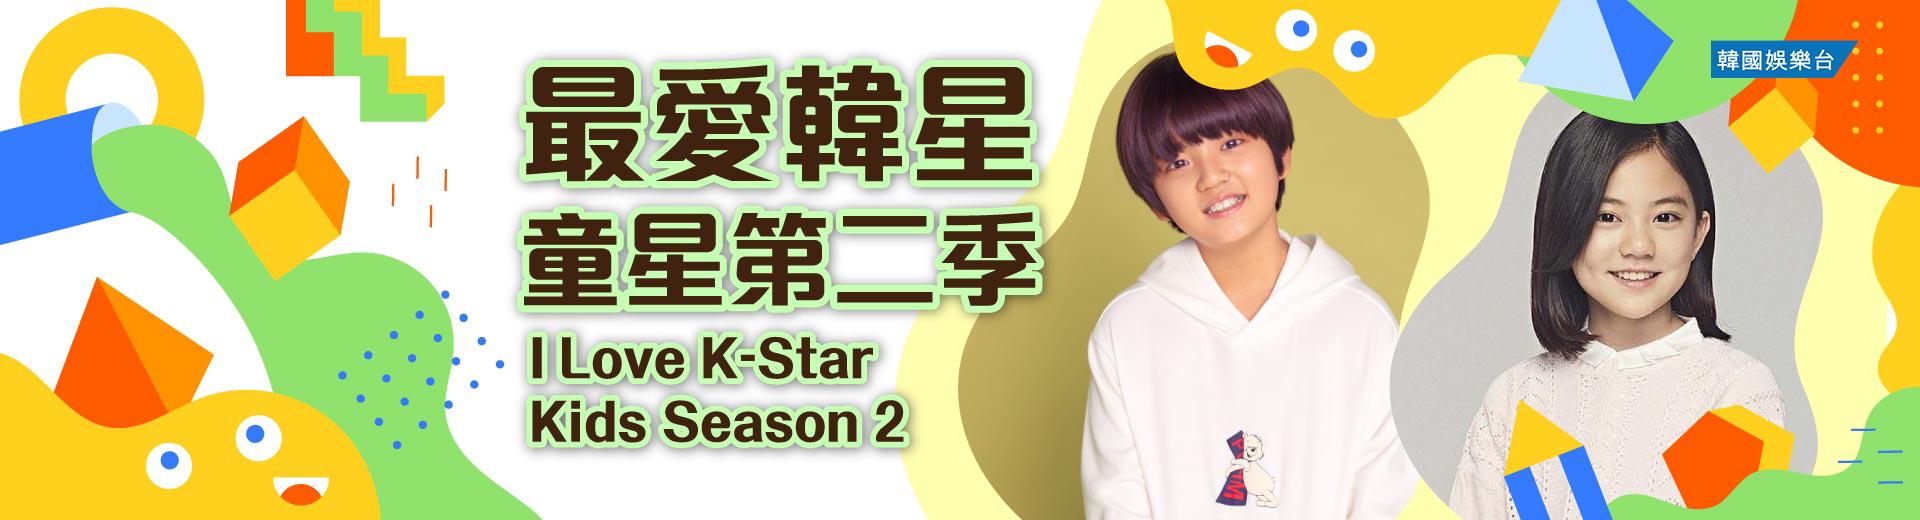 I Love K-Star : Kids Season 2 最愛韓星: 童星第二季